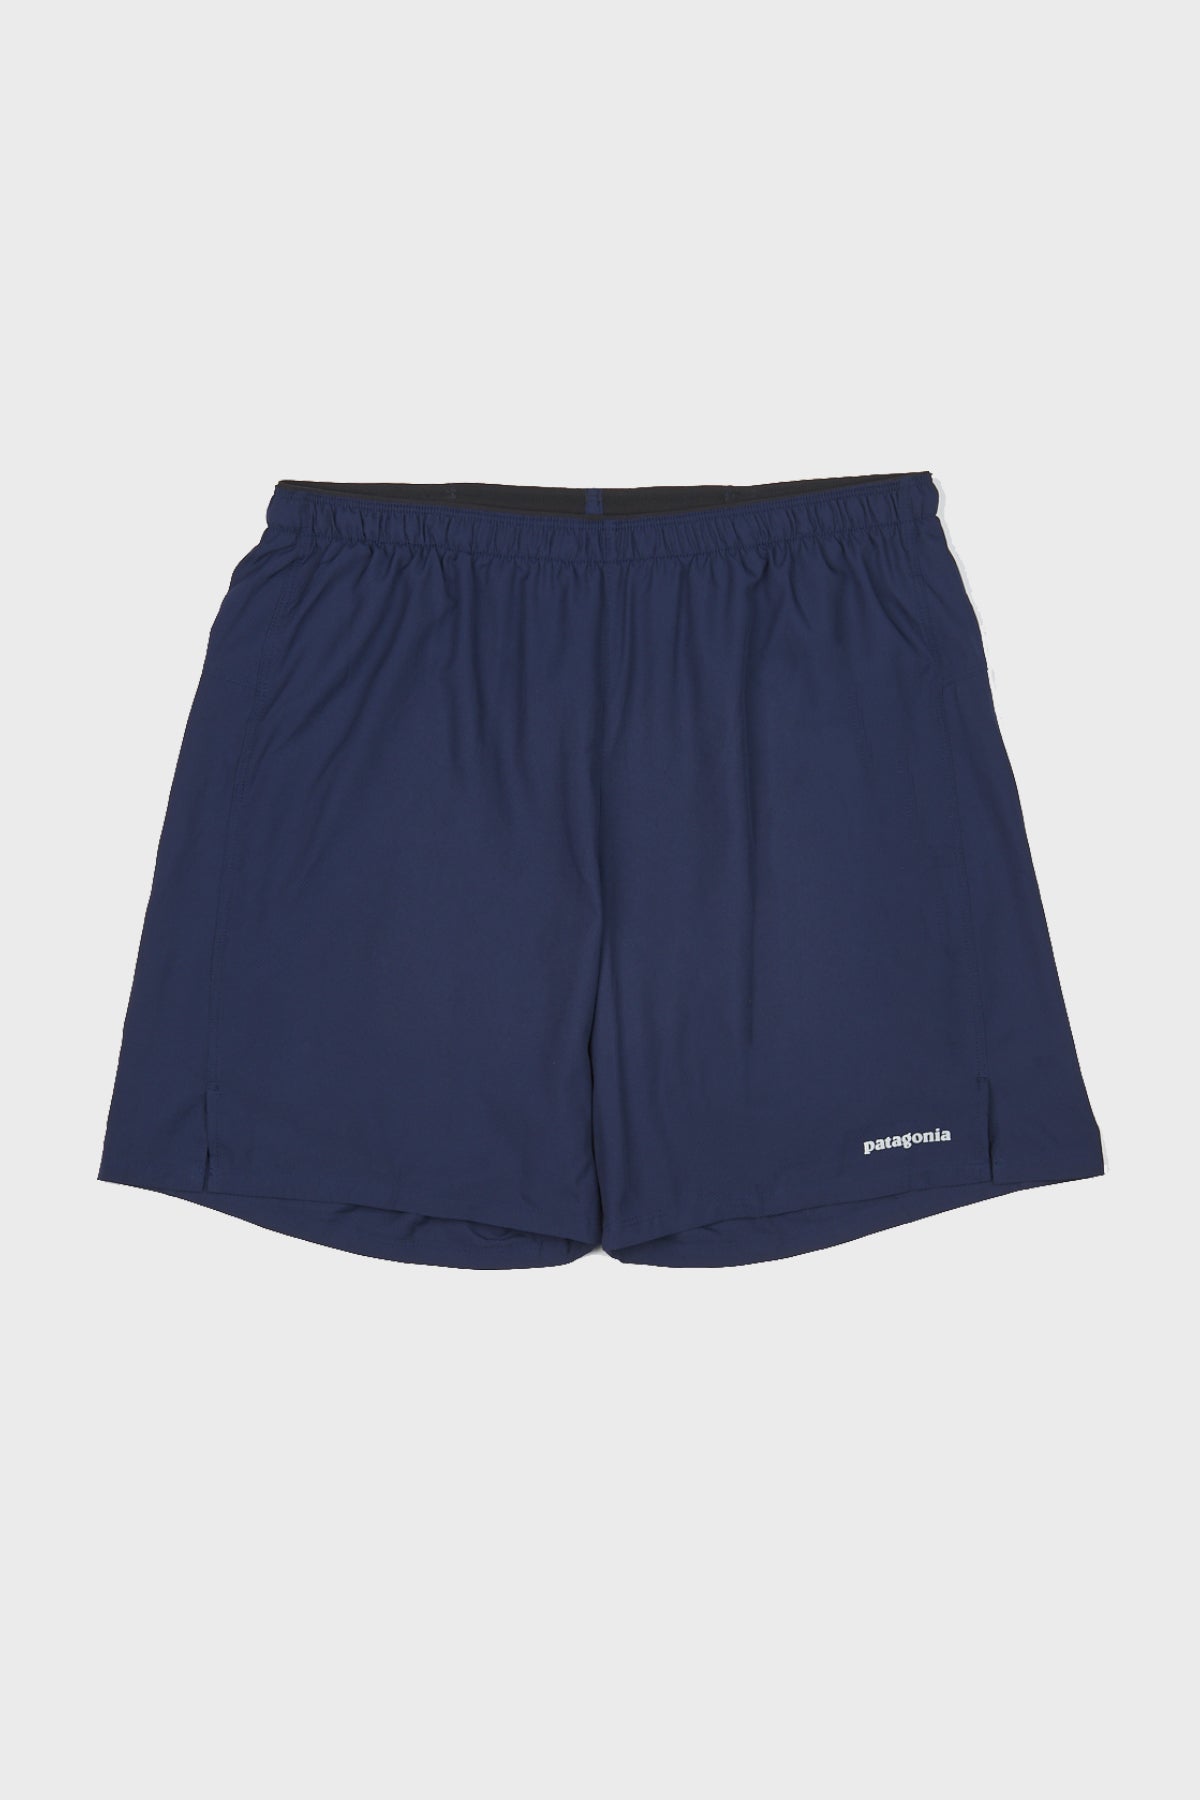 patagonia - strider shorts 7"